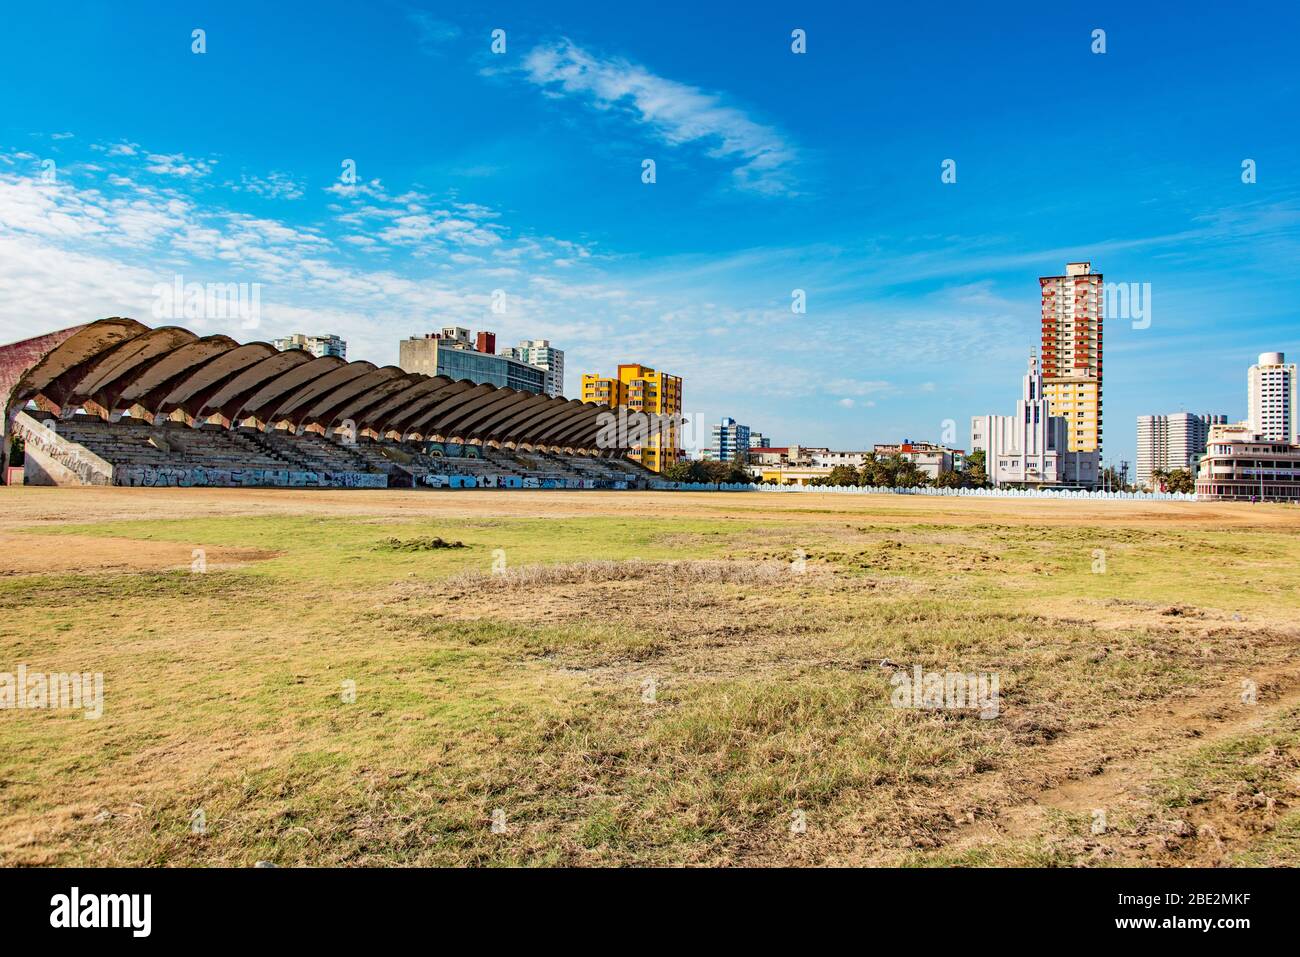 old stadium in havana, cuba Stock Photo